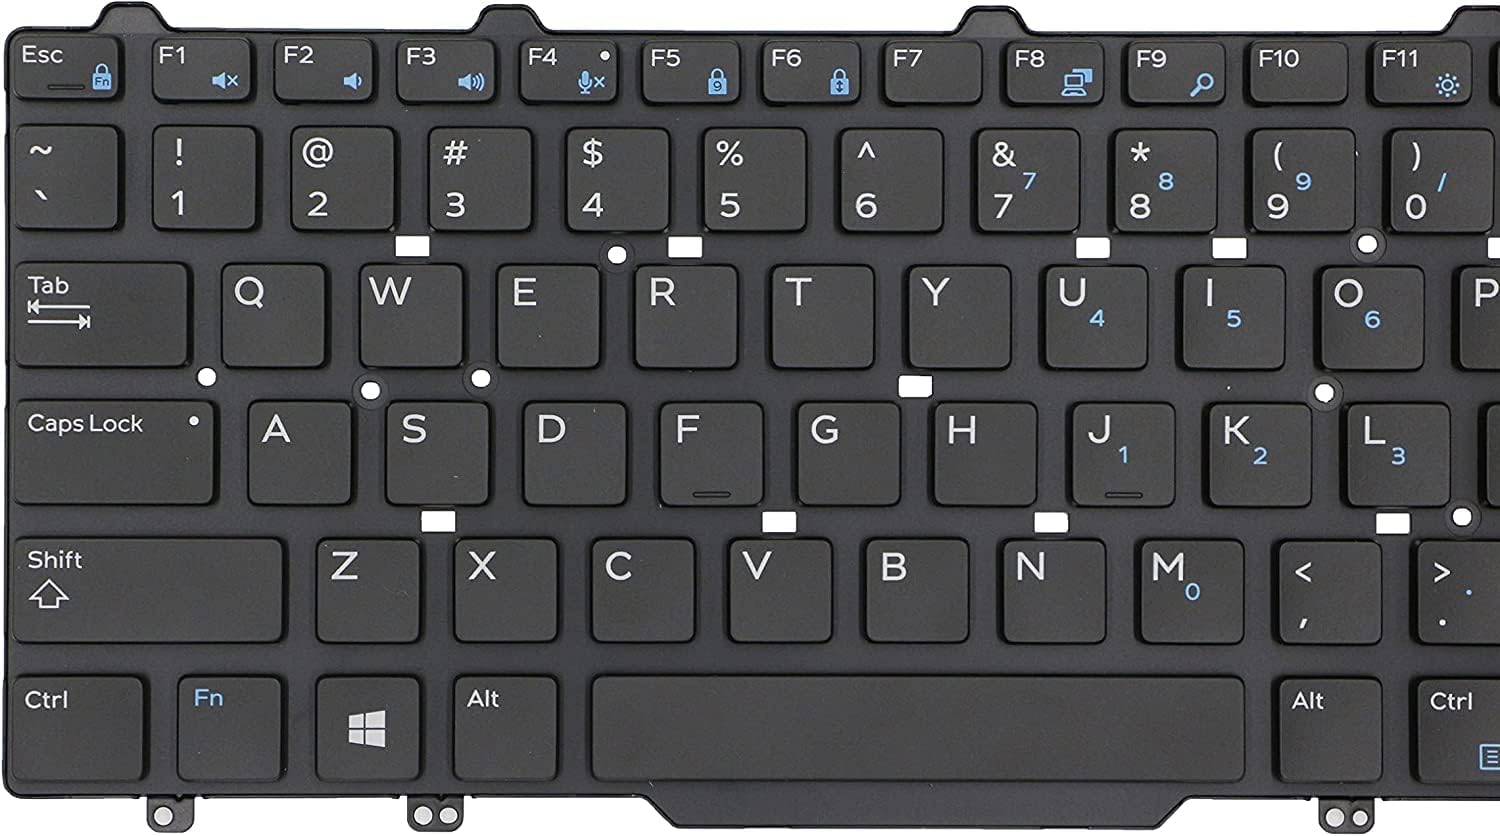 WISTAR Laptop Keyboard Compatible for Dell Latitude 3340 3350 E5450 E5470 E7450 E7470 7480 7490 5480 5488 3340 3350 Laptop